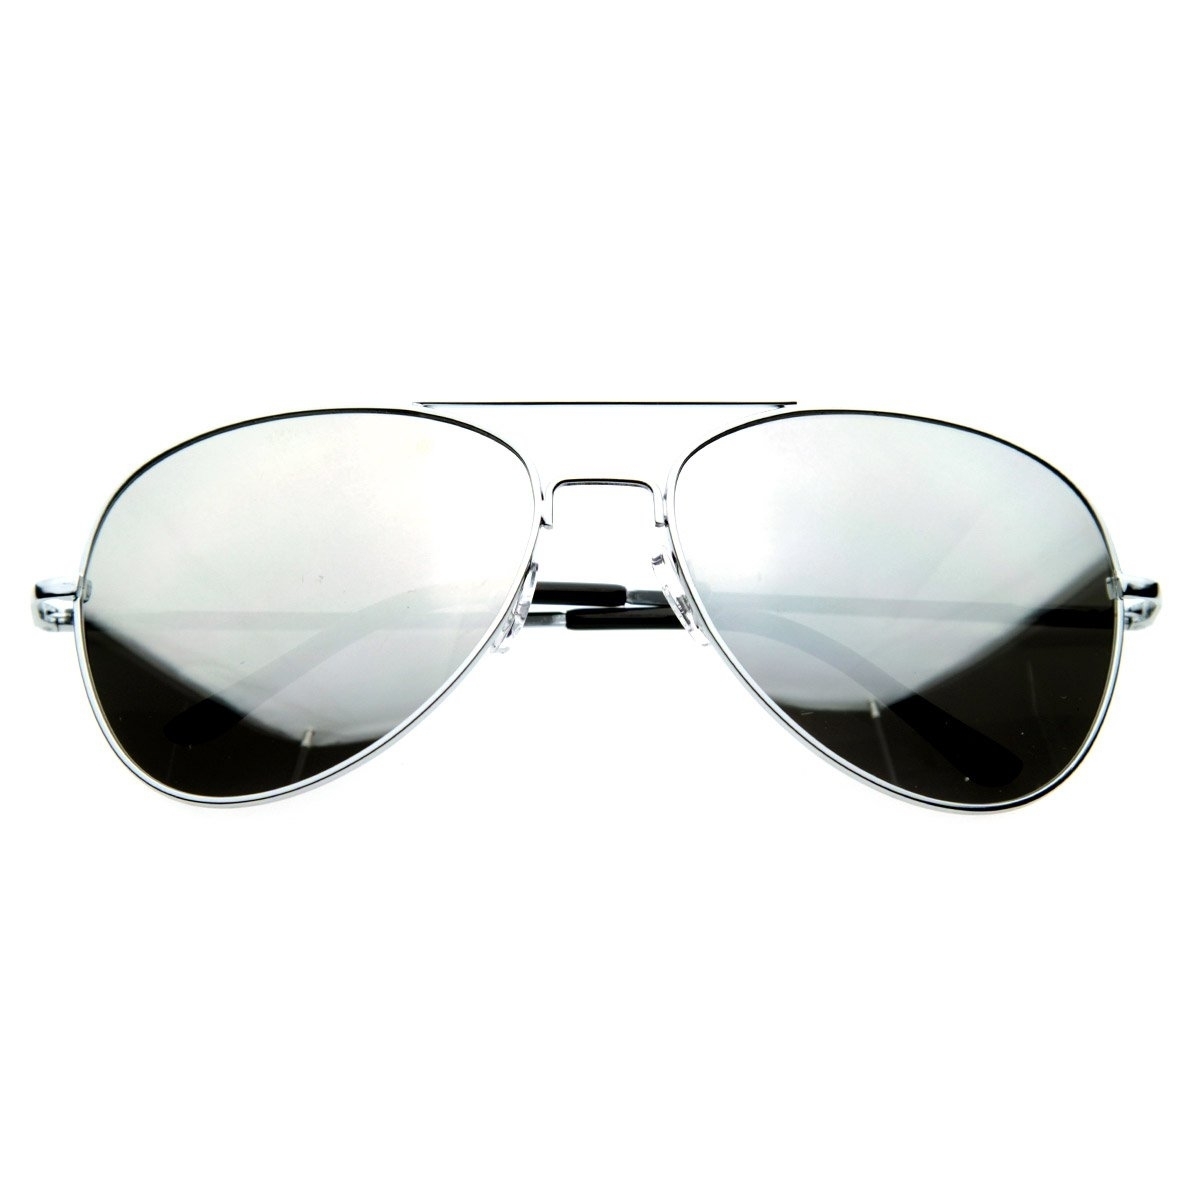 Premium Mirrored Aviator Top Gun Sunglasses W/ Spring Loaded Temples - Gold Each